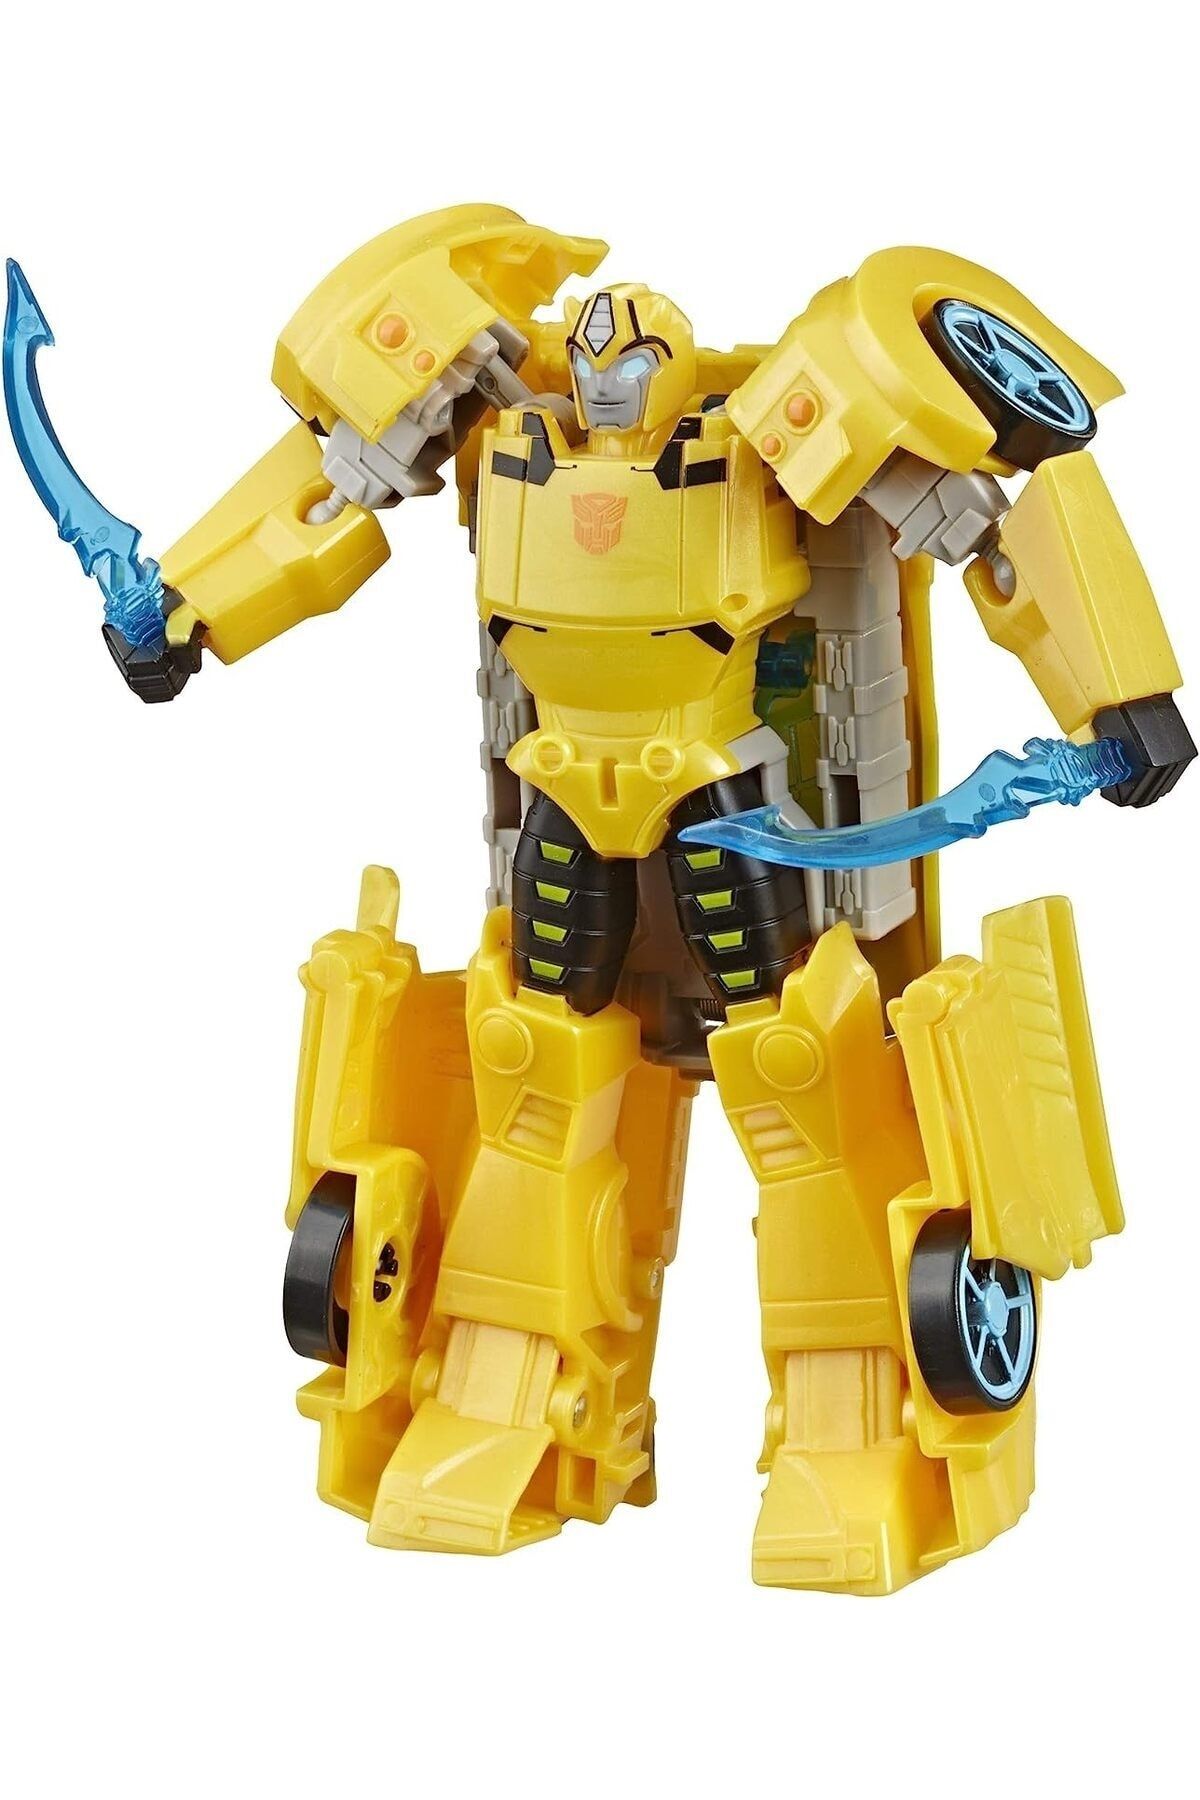 Hasbro Transformers Toys Cyberverse Ultra Class Bumblebee Action Figure